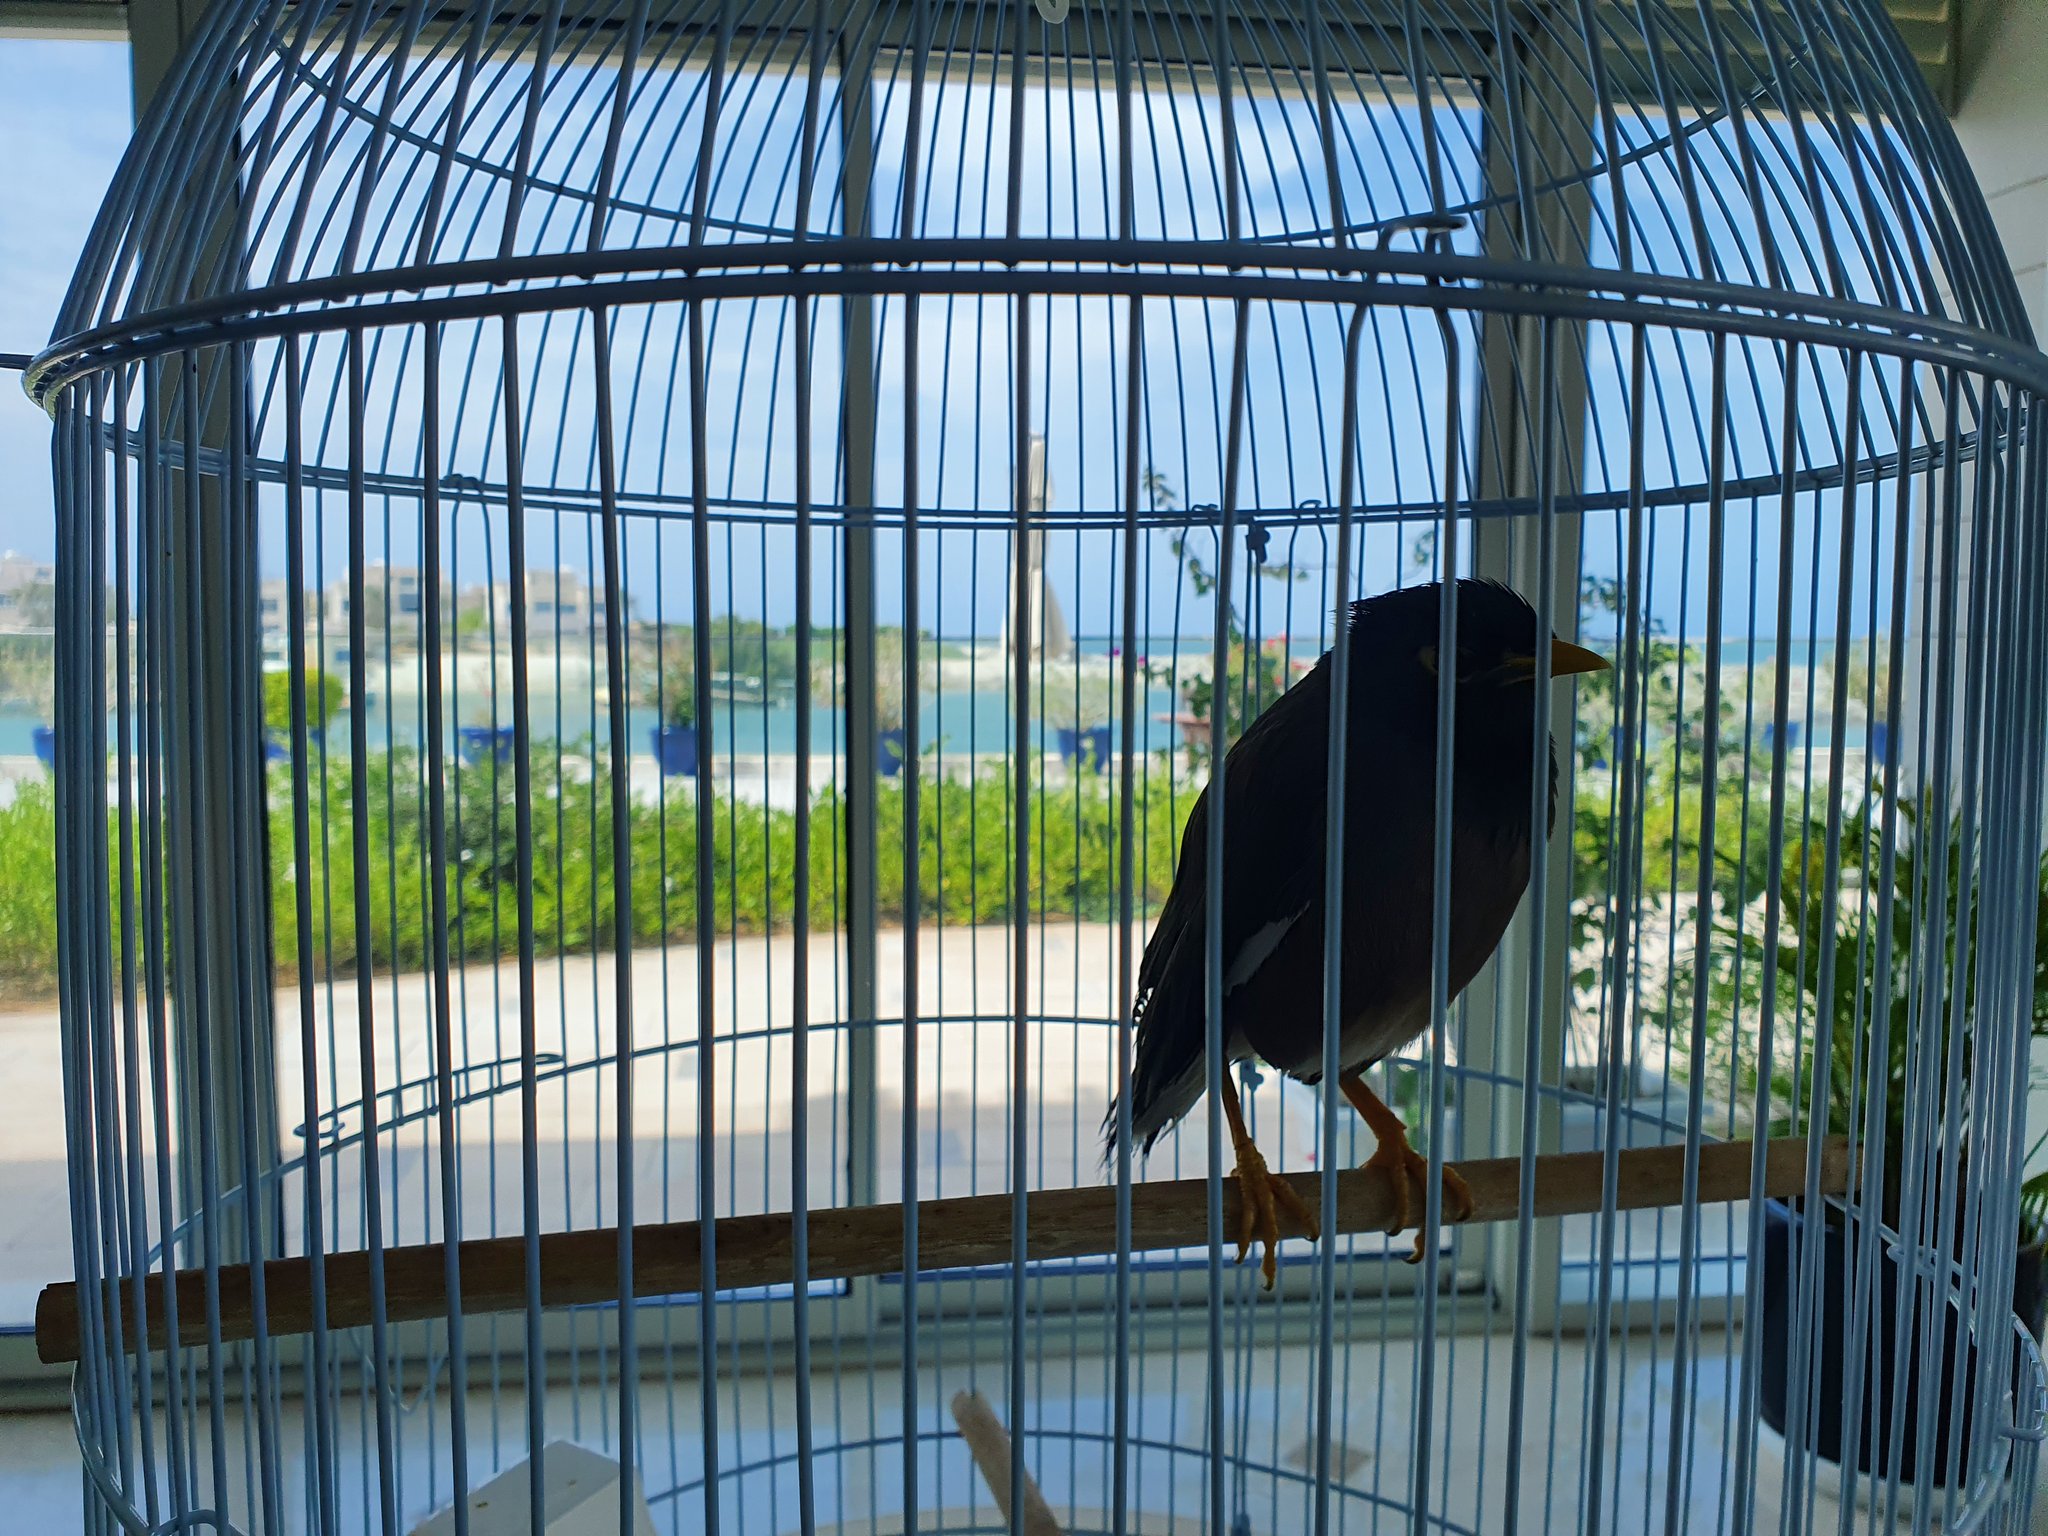 La historia del pájaro que se convirtió en la mascota de la embajada de Francia tras la llegada los talibanes